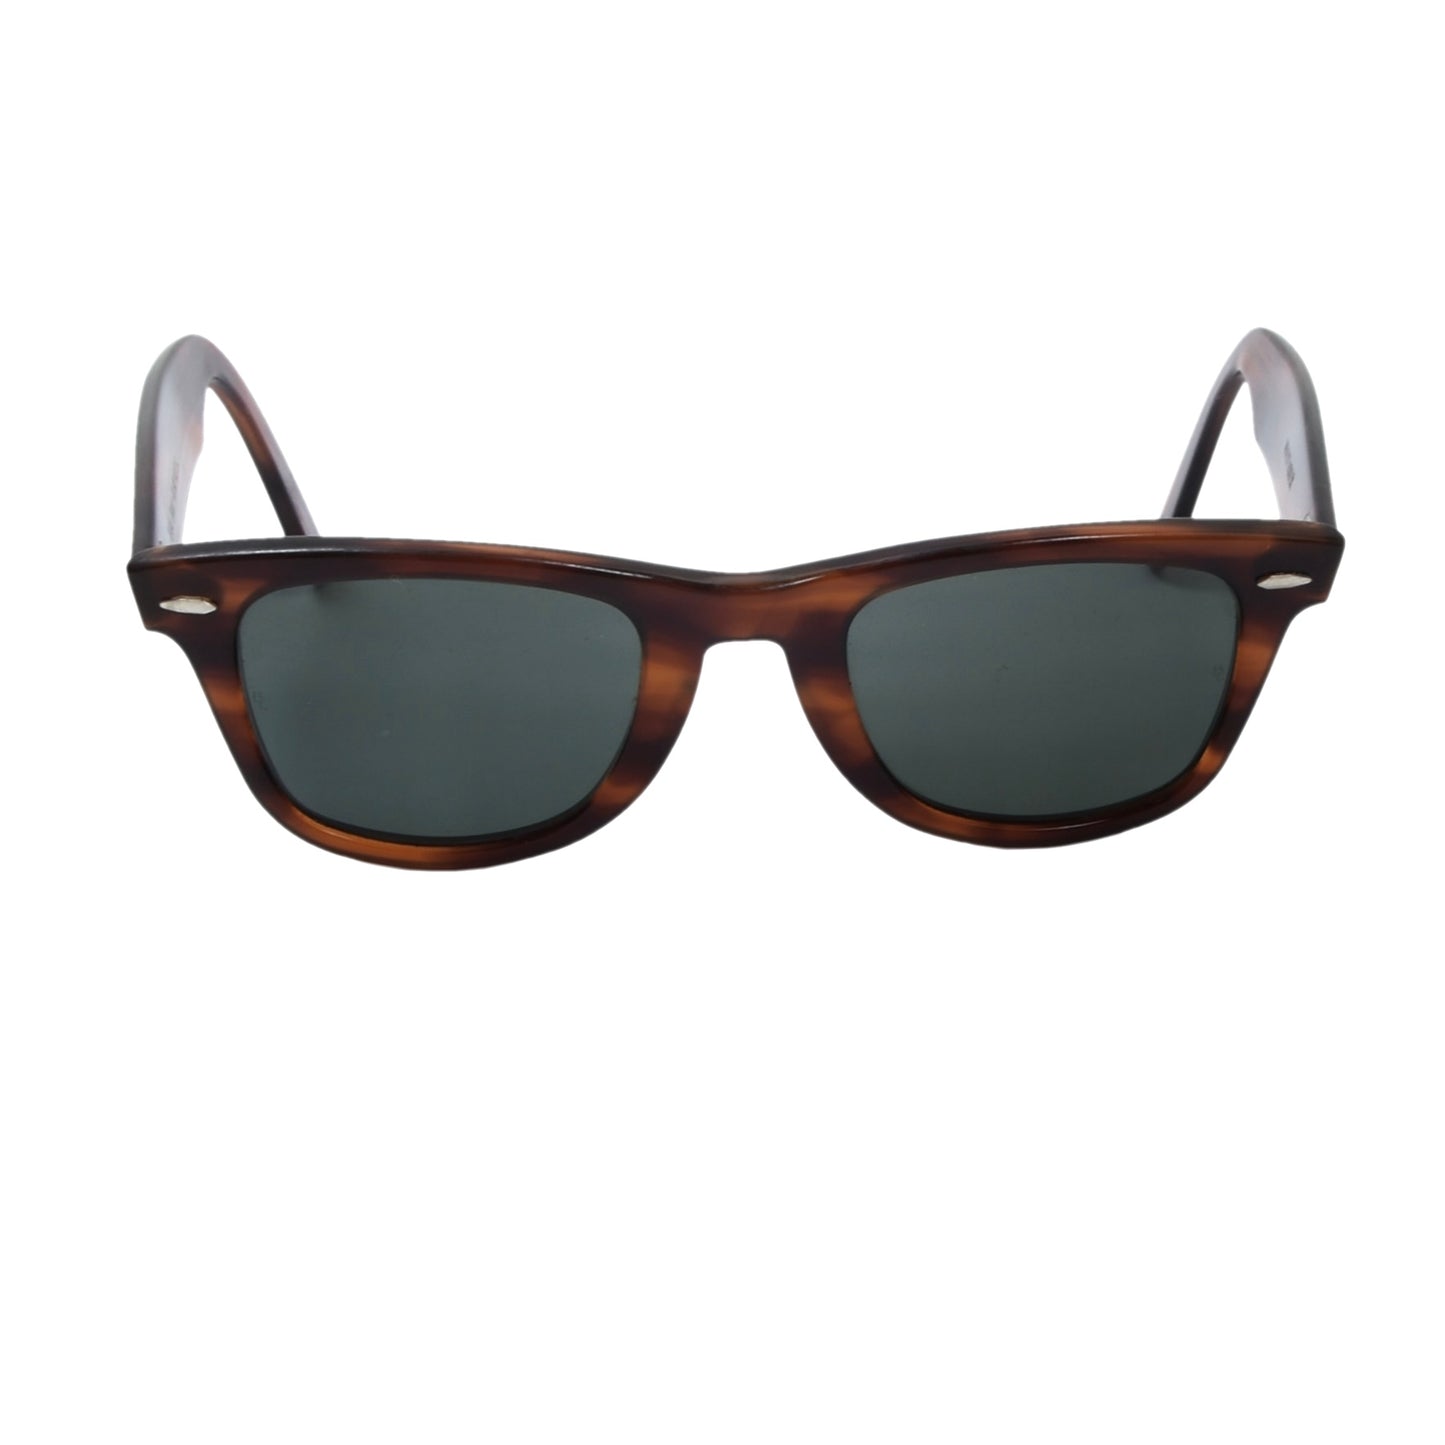 Bausch & Lomb Ray-Ban Wayfarer 5024 Sunglasses - Tortoiseshell